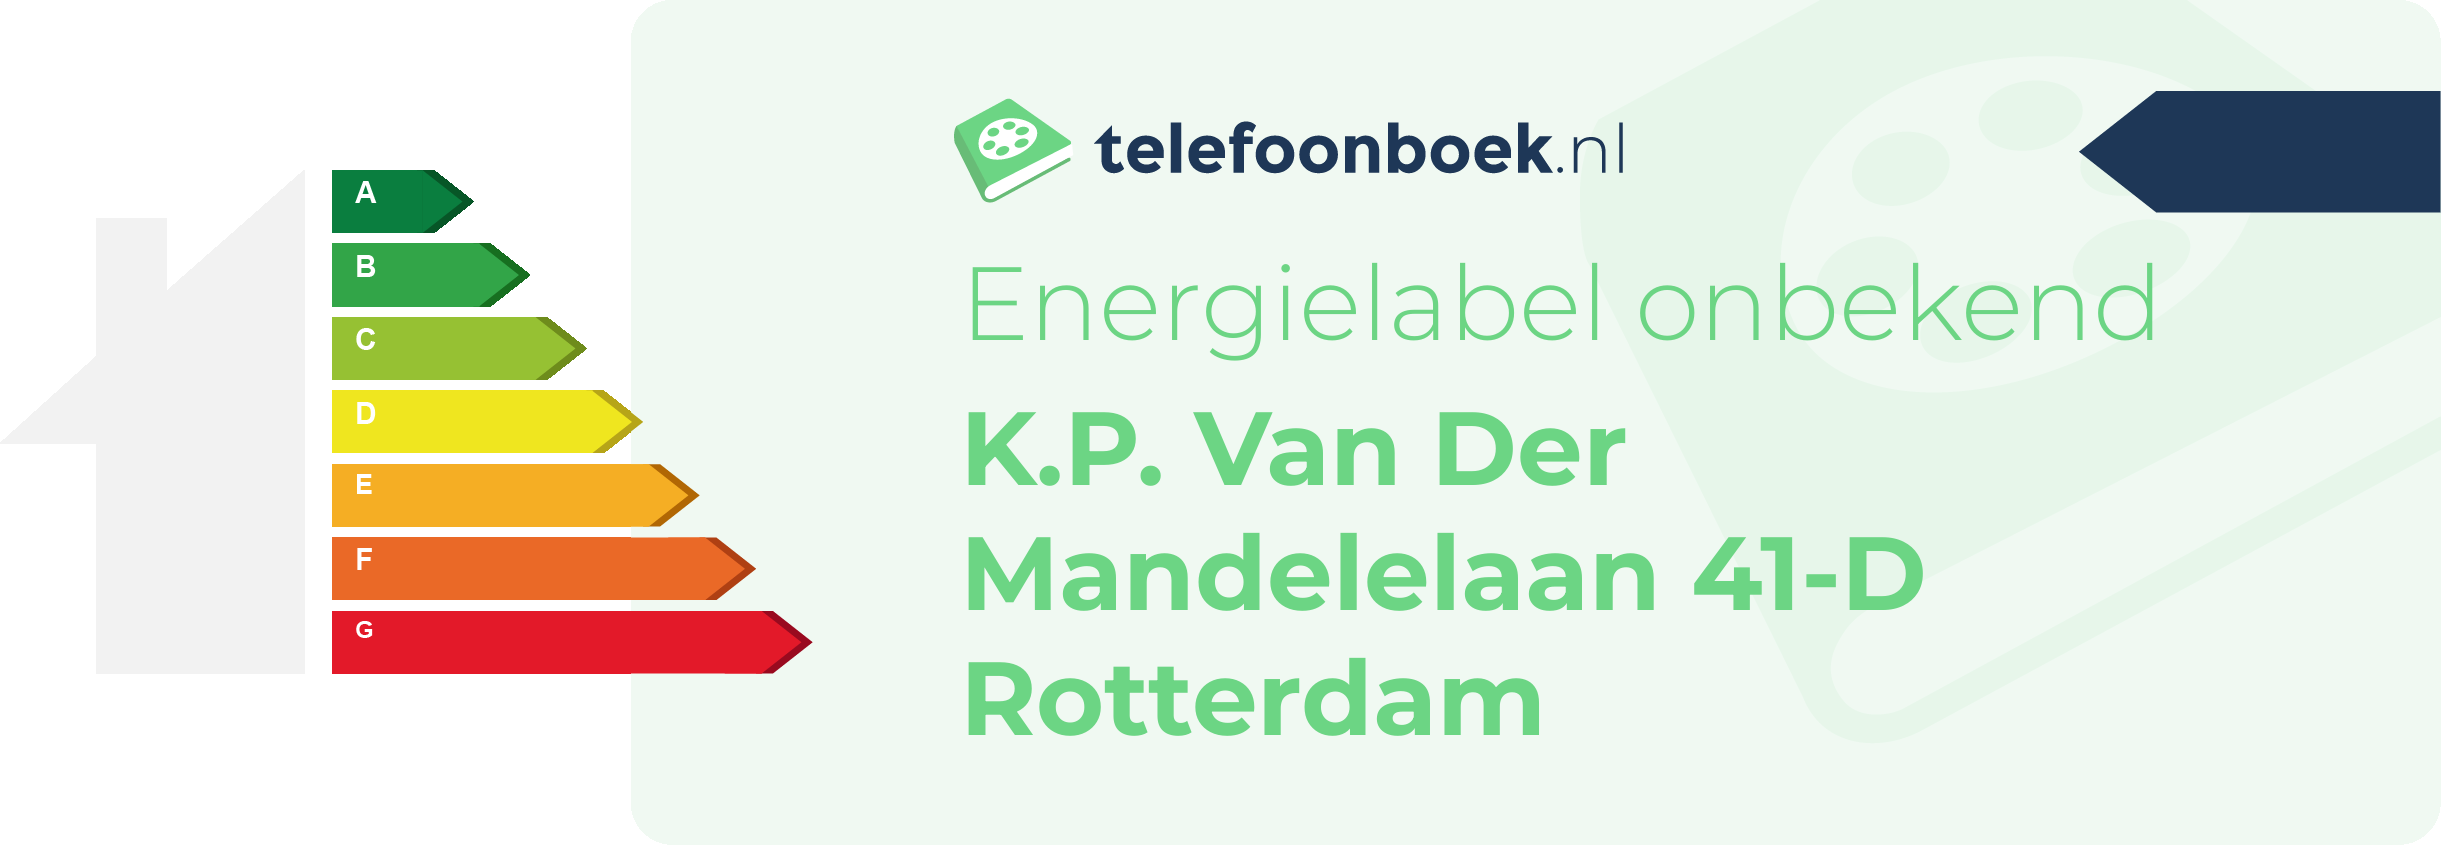 Energielabel K.P. Van Der Mandelelaan 41-D Rotterdam